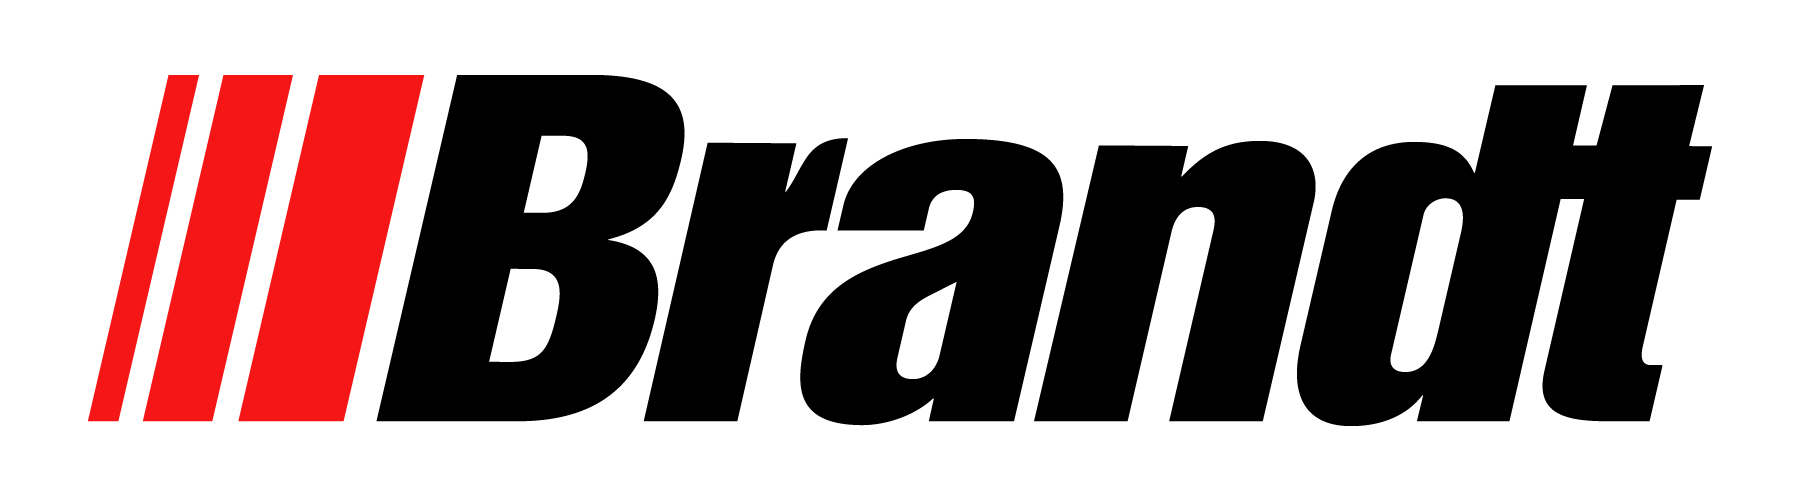 Brandt.1-logo-col-reverse